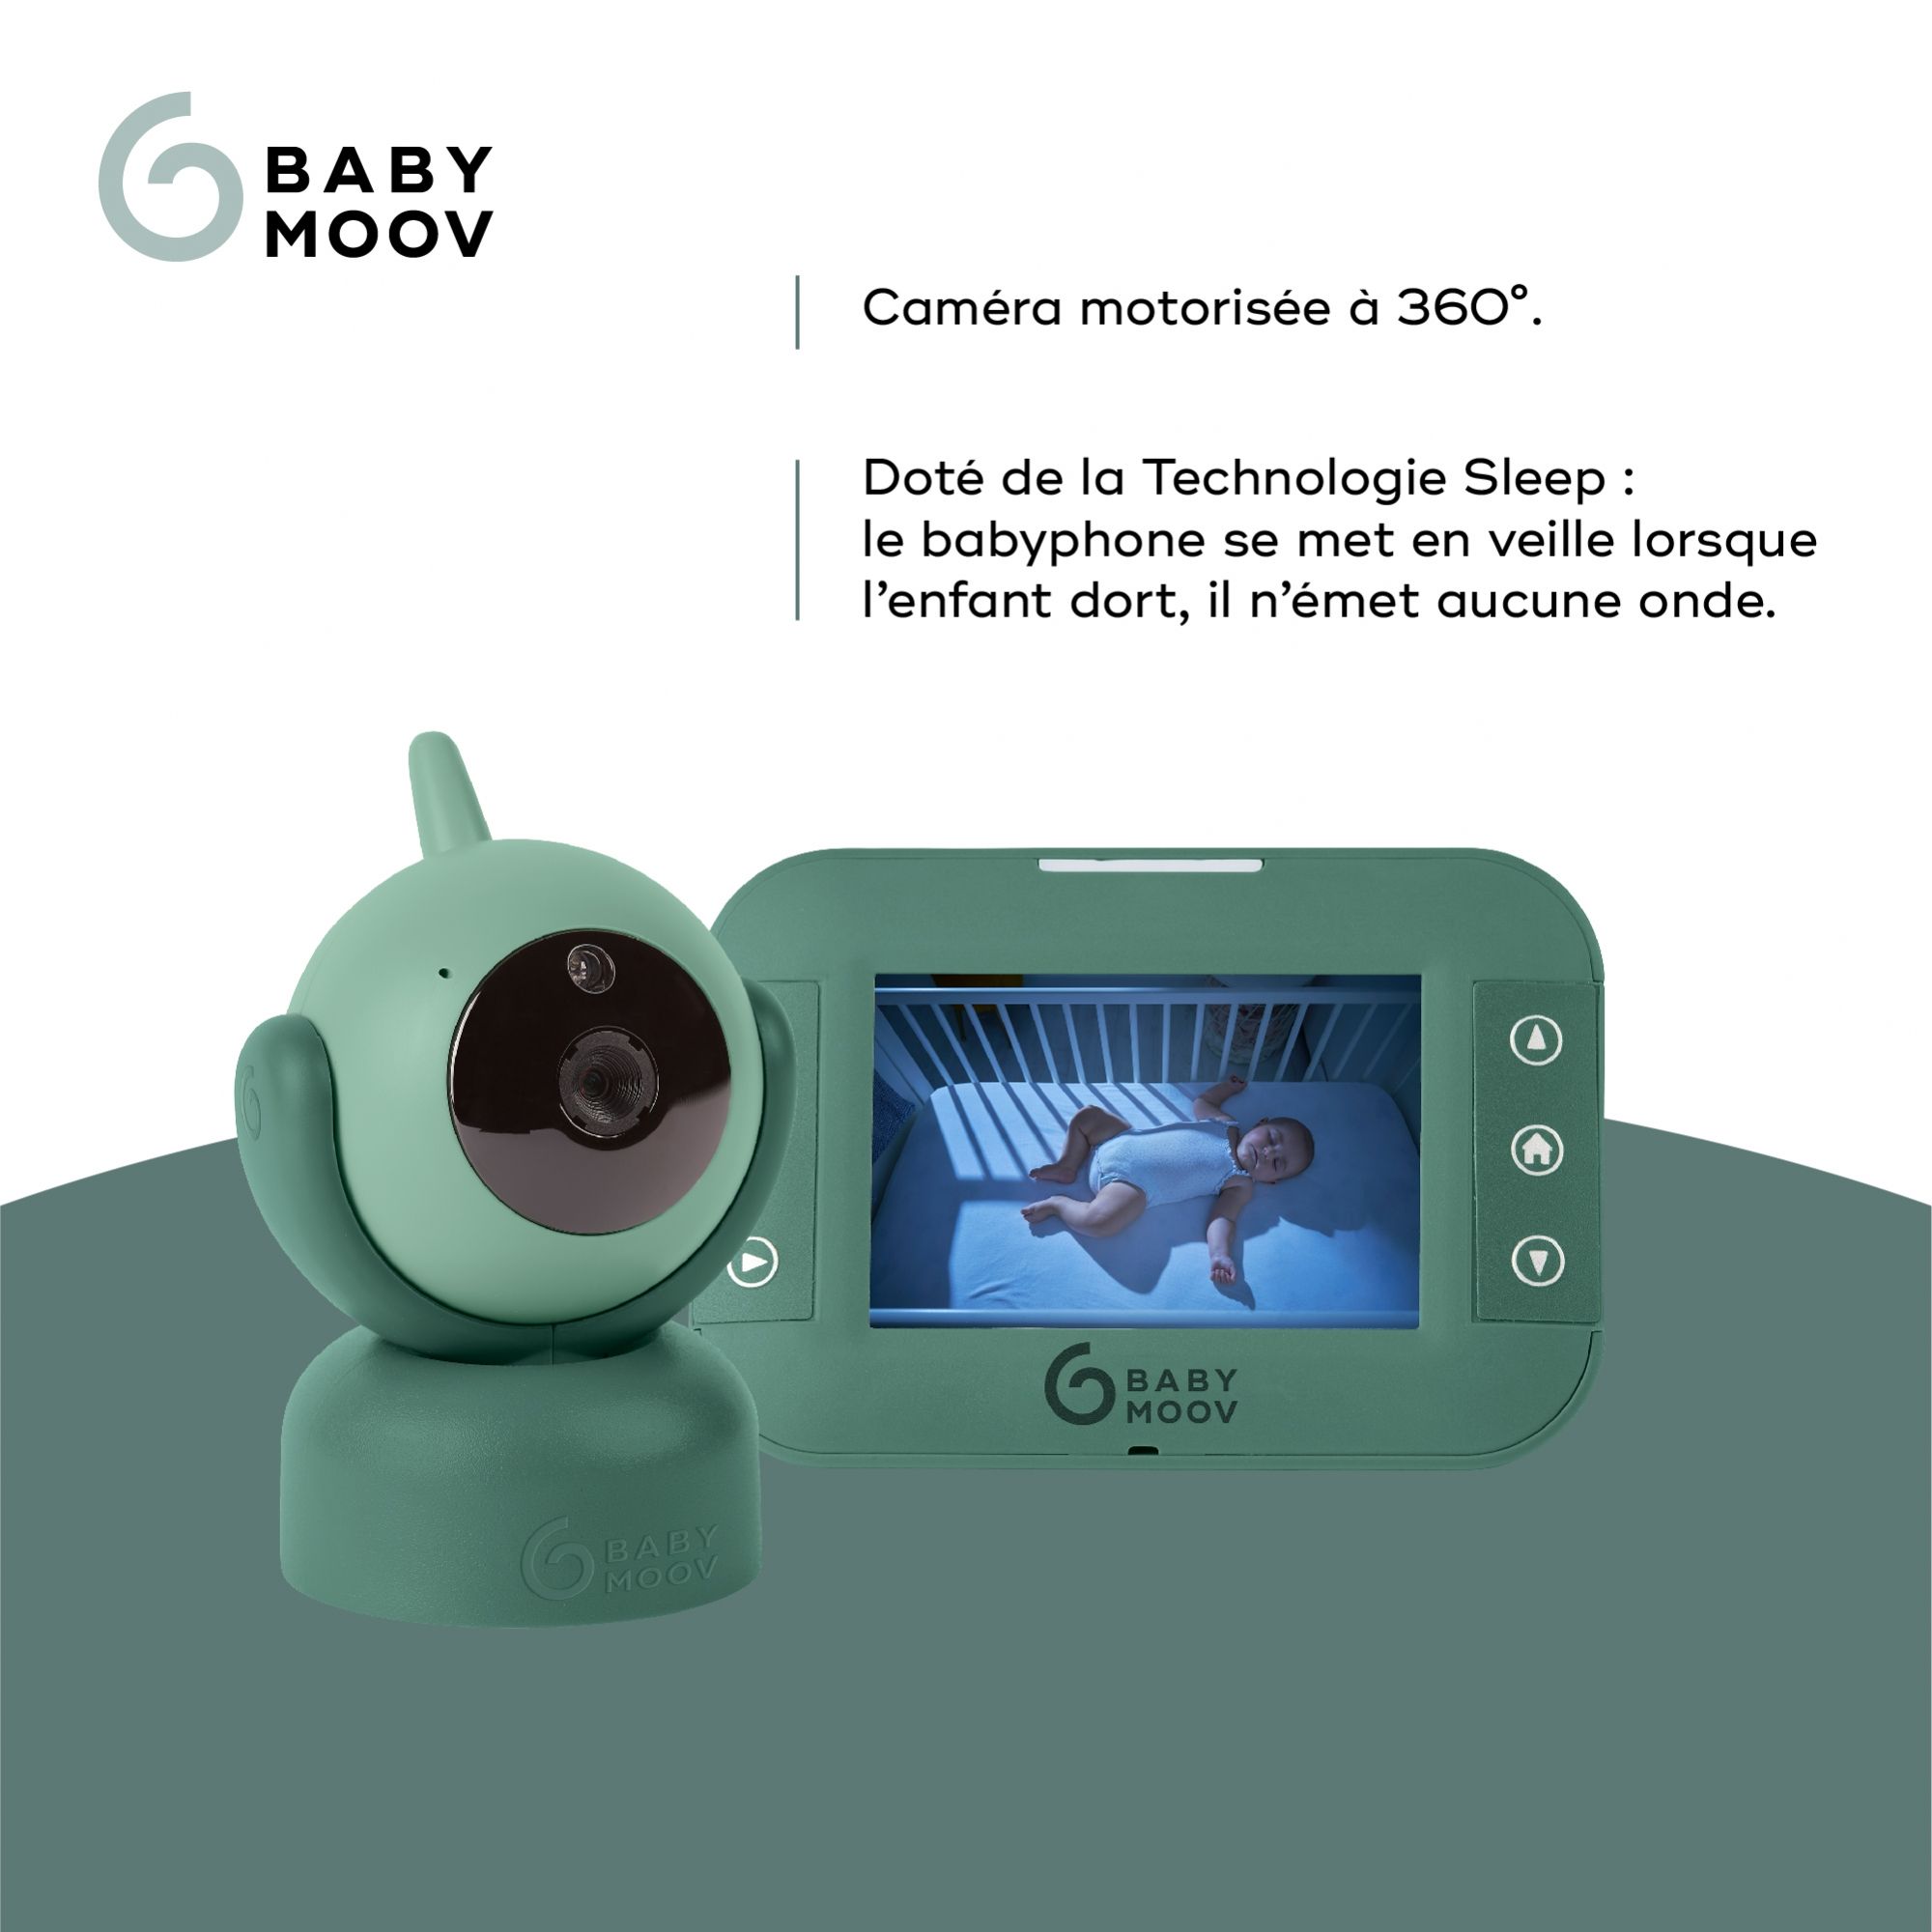 Babyphone vidéo Yoo Twist - Made in Bébé